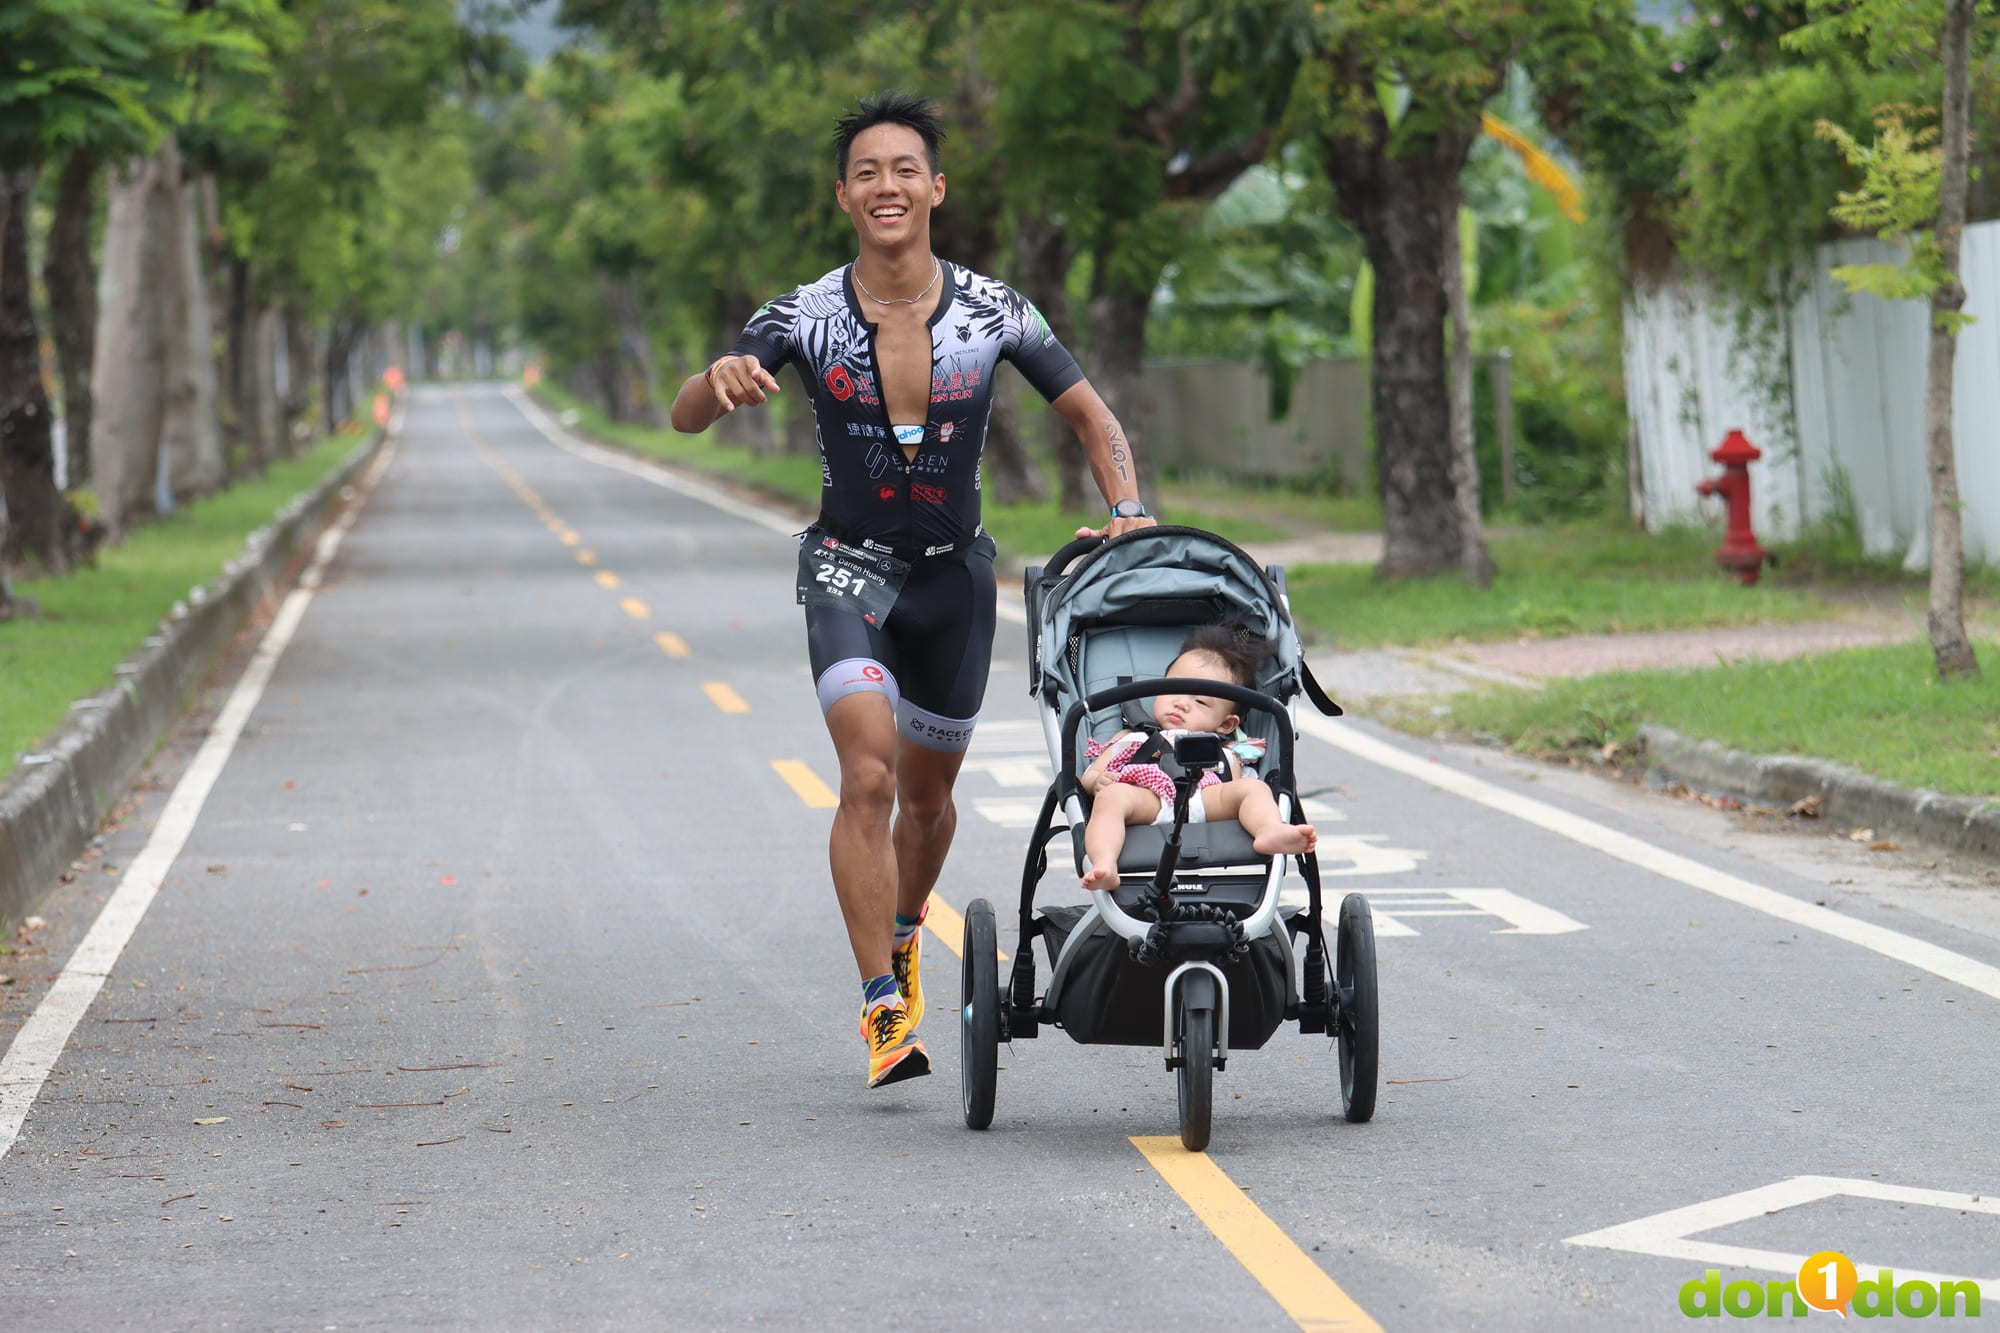 Darren帶著女兒一起跑完42公里。